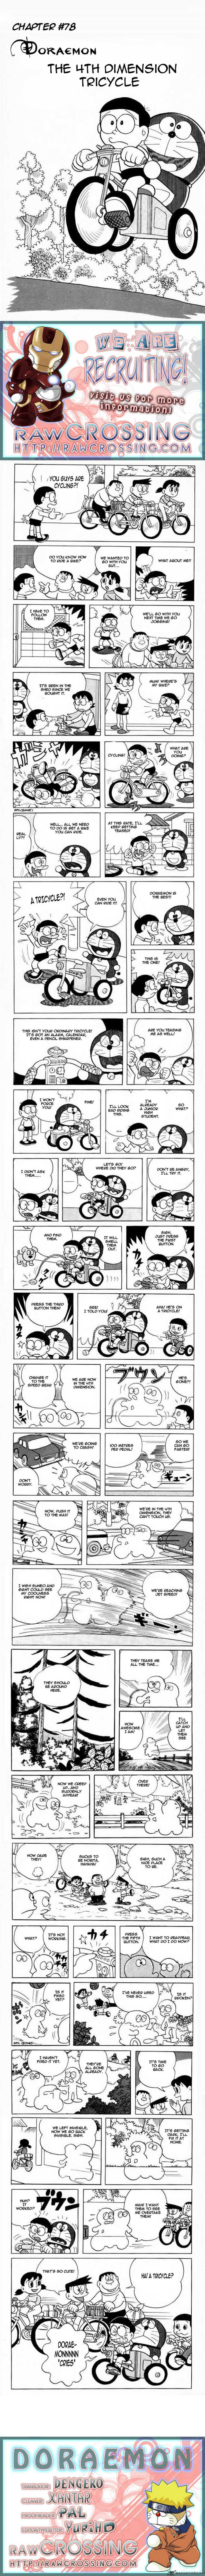 Doraemon Chapter 78 Page 1